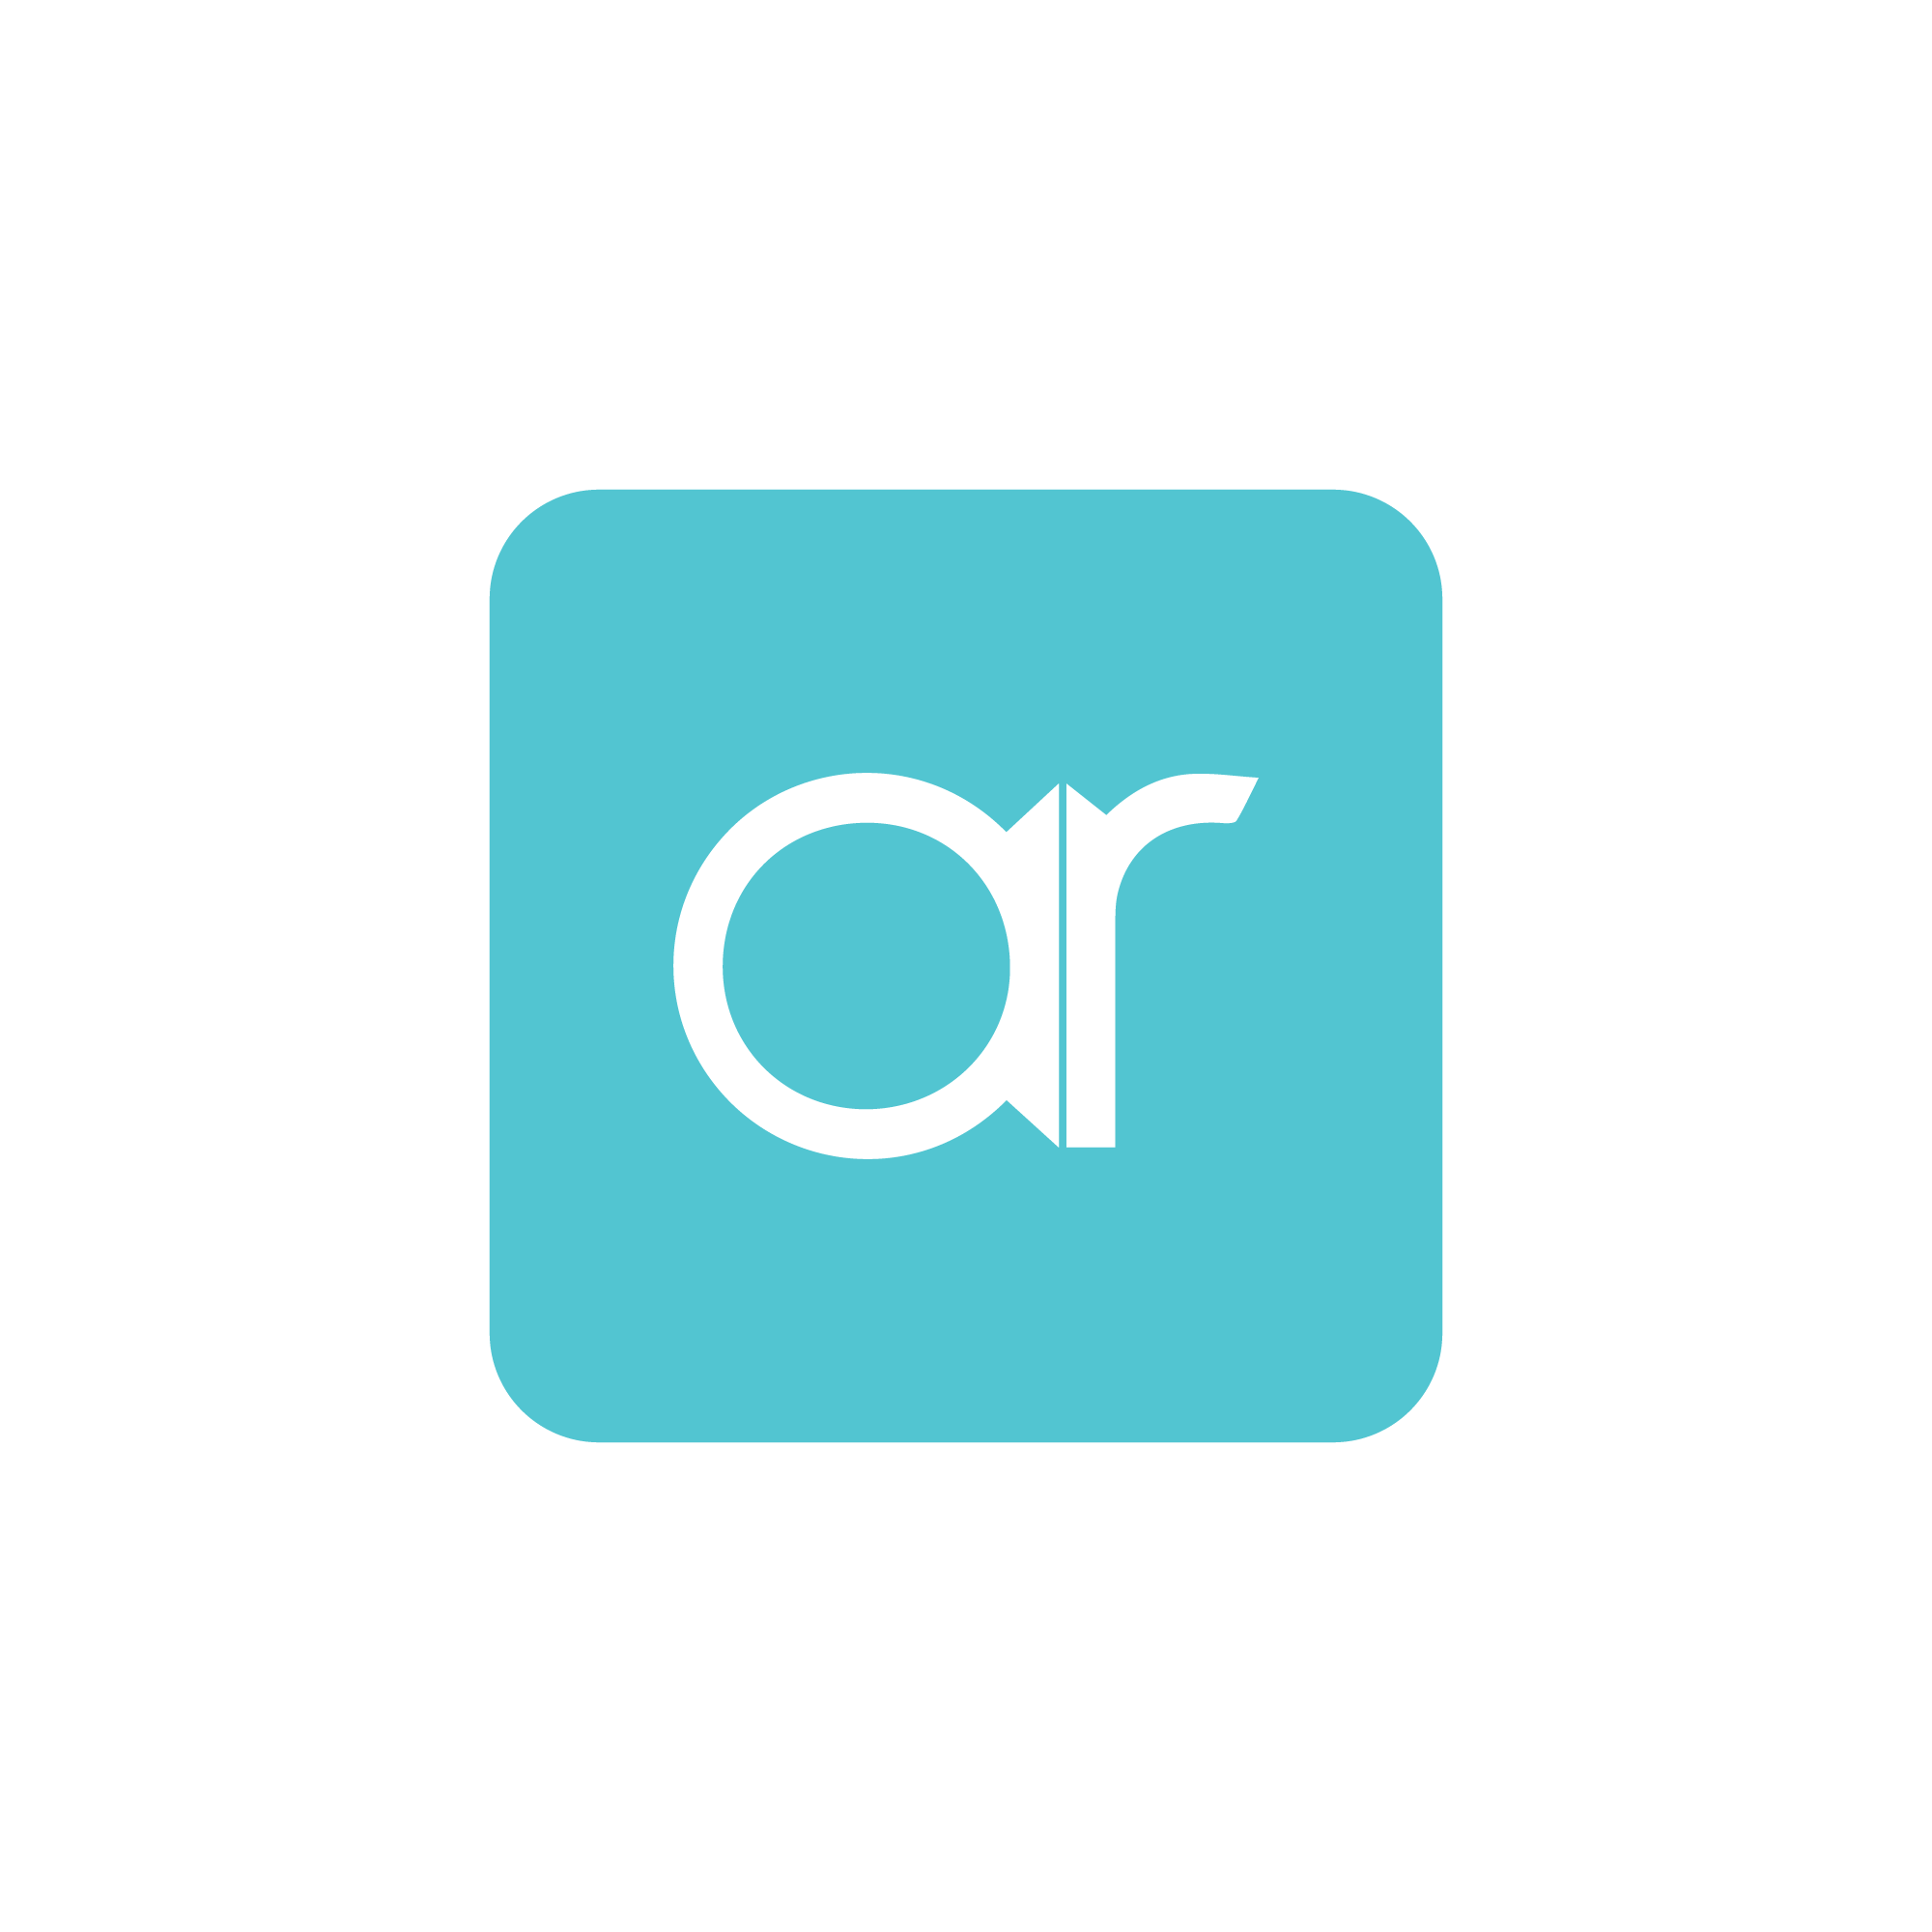 ar logo design ar ar logo product label